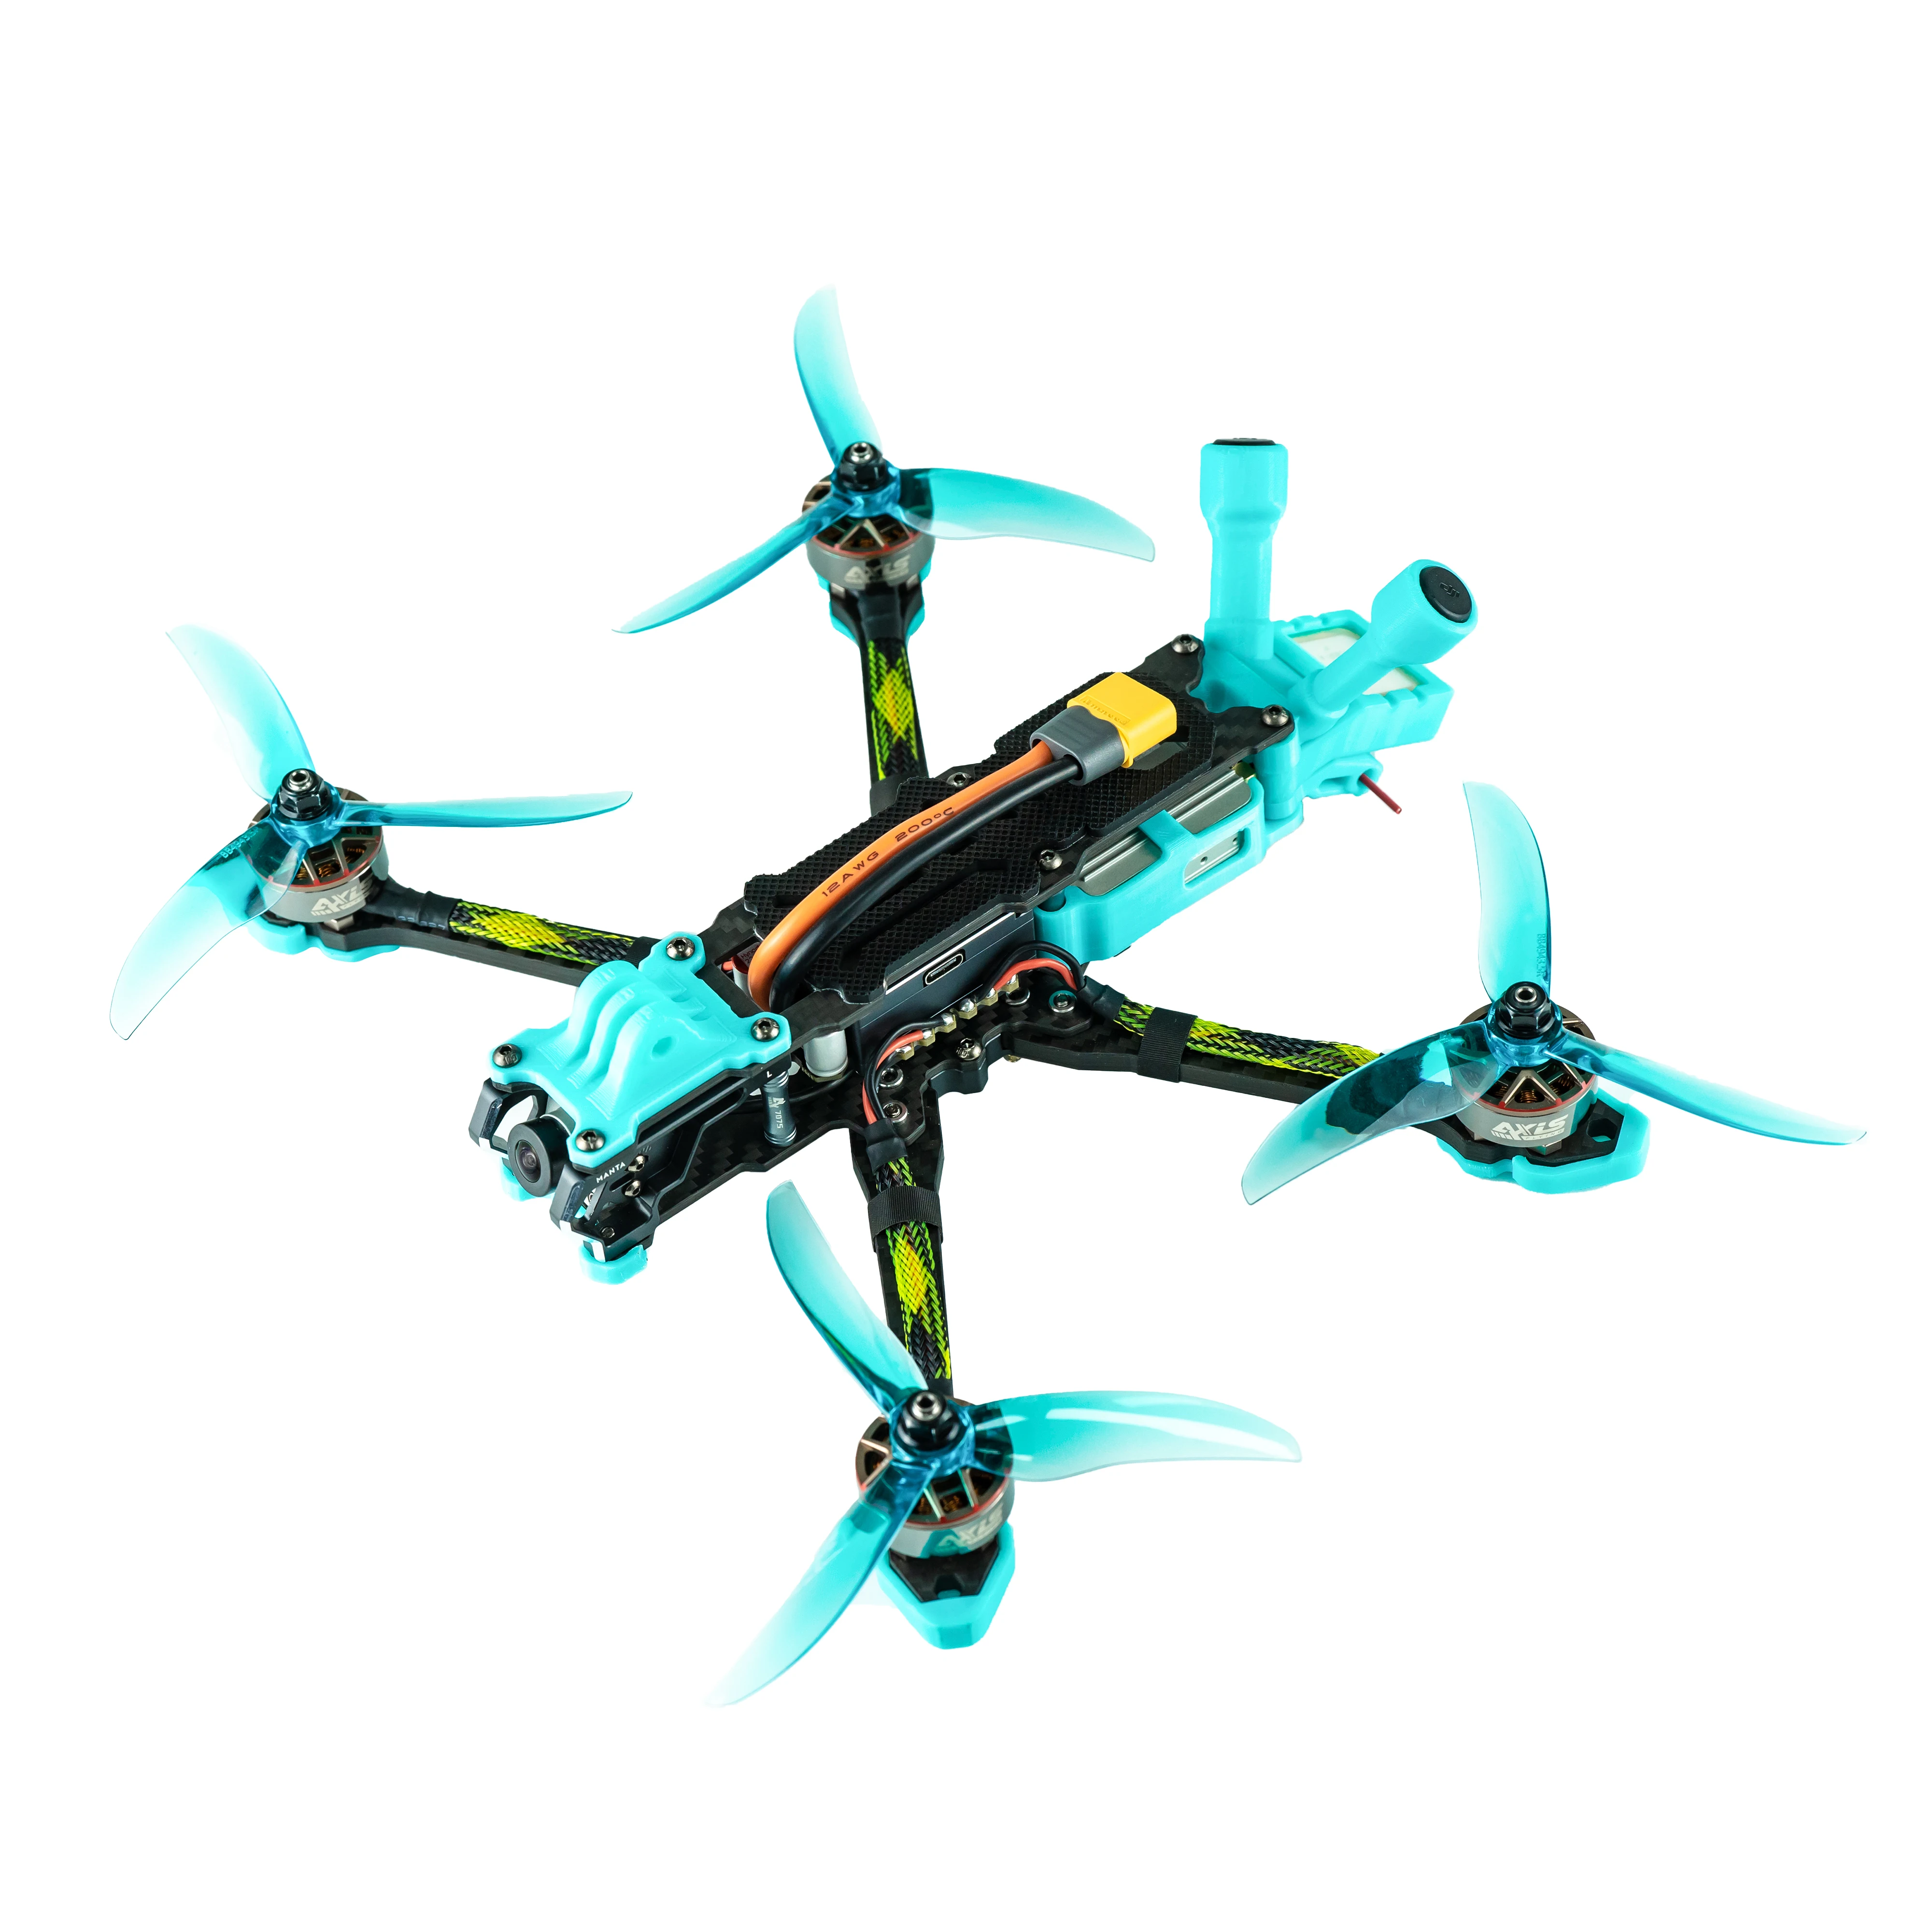 

MANTA5" / 5inch FPV Drone / Analog 5.8G / HD / Freestyle Squashed X Drone / GPS